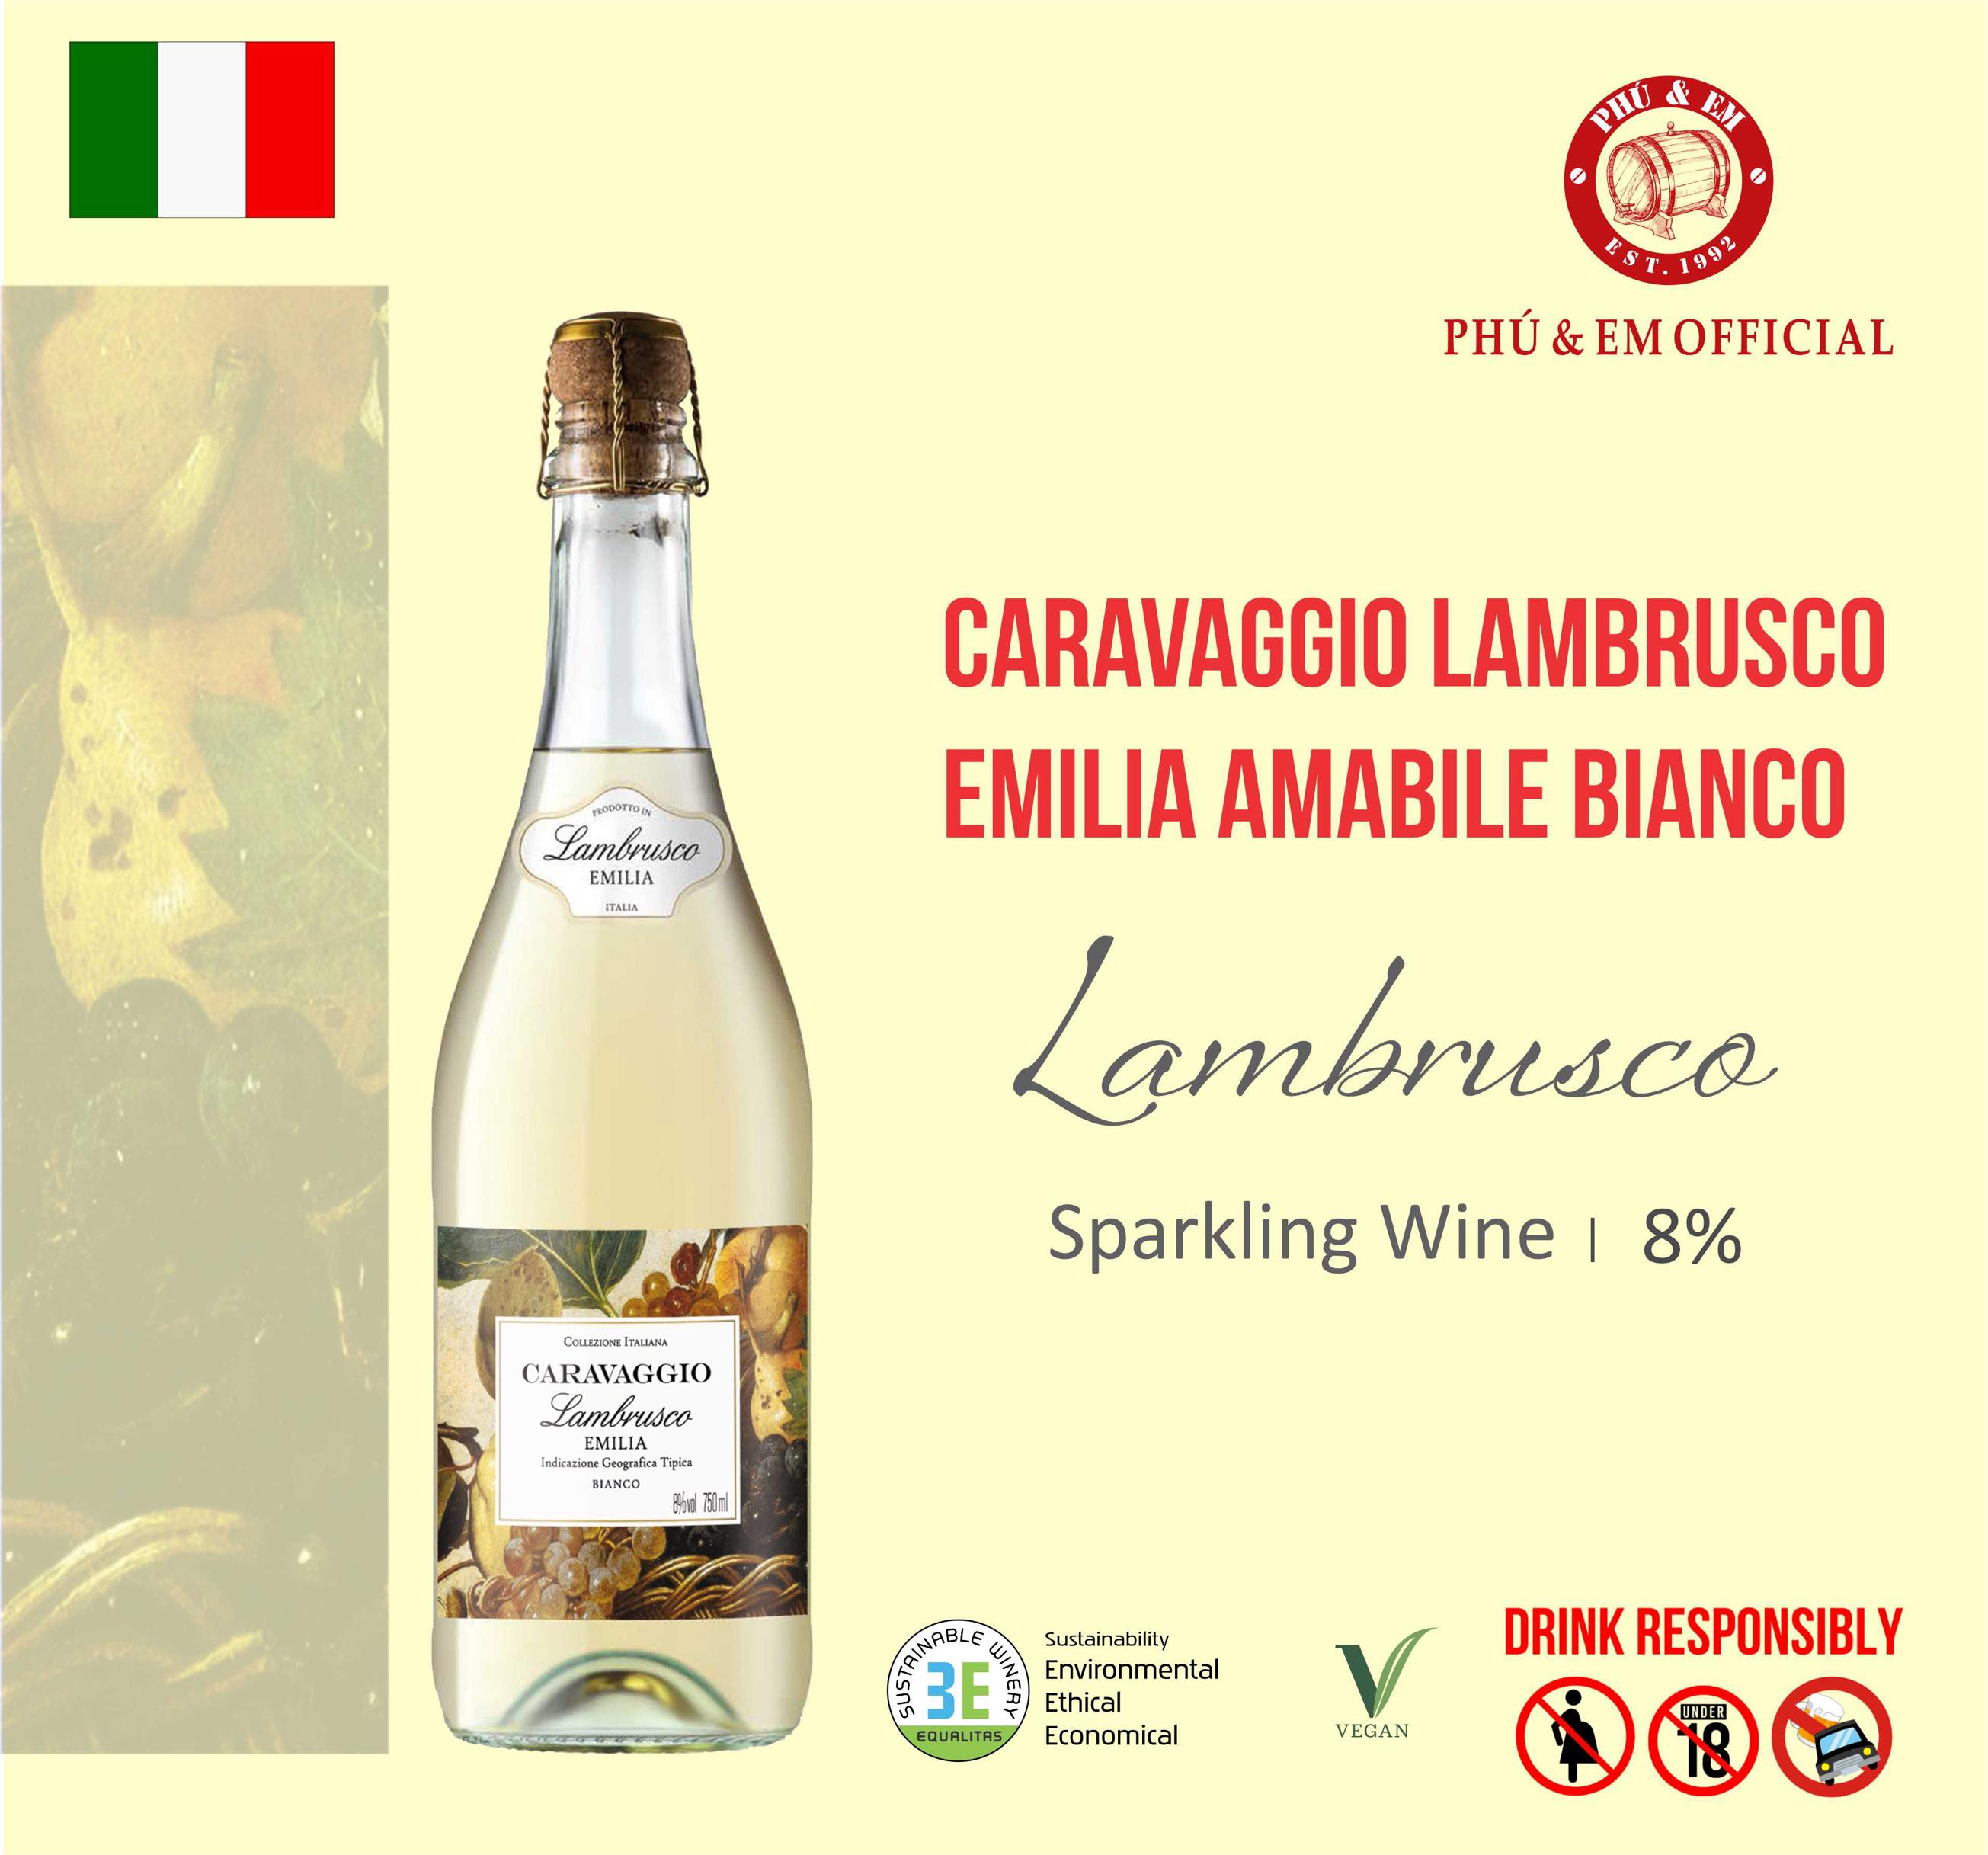 Rượu Vang Nổ Ý Caravaggio Lambrusco Emilia Amabile Bianco